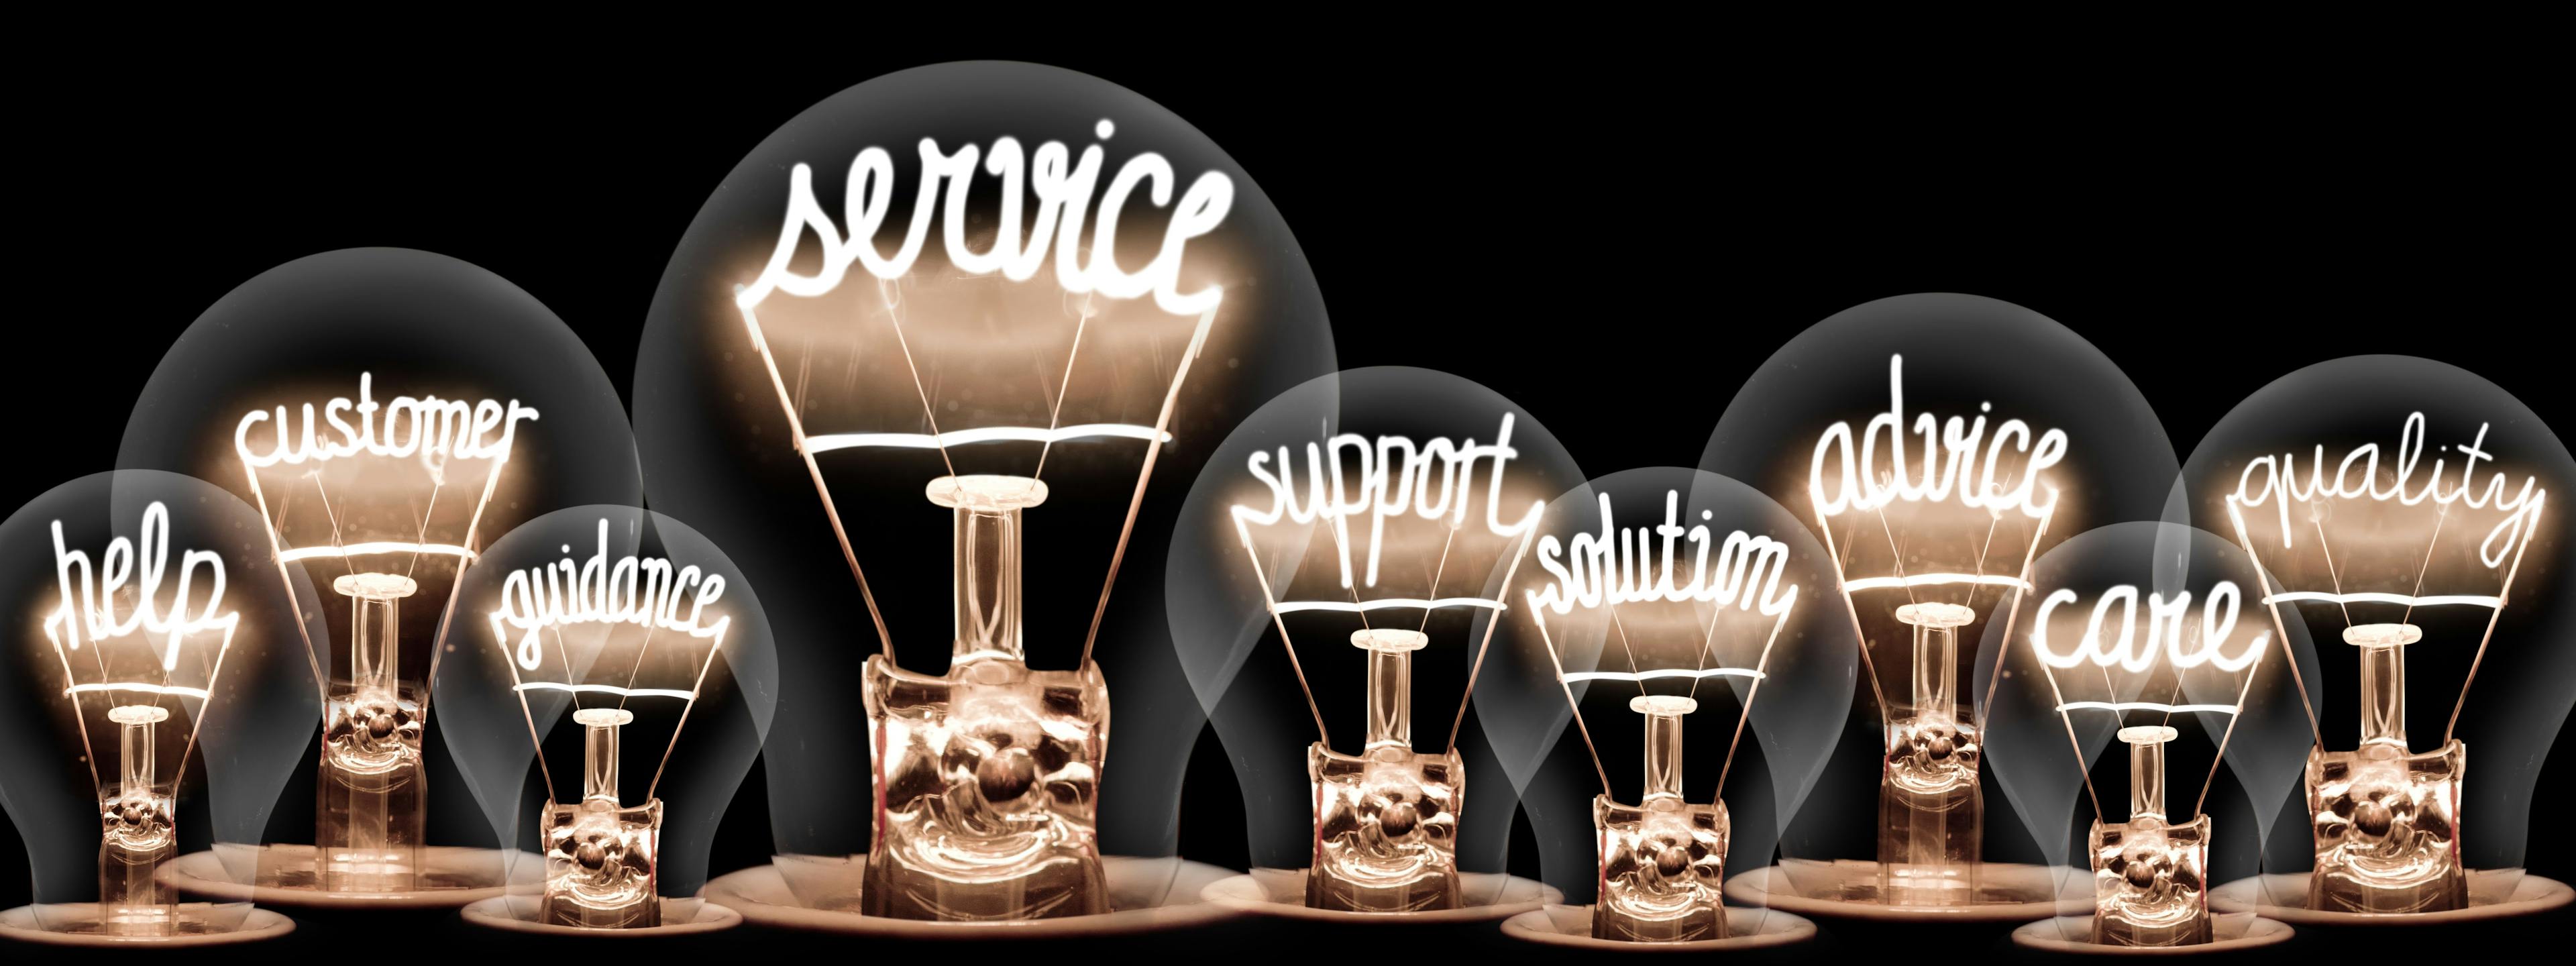 customer service worlds in lightbulbs